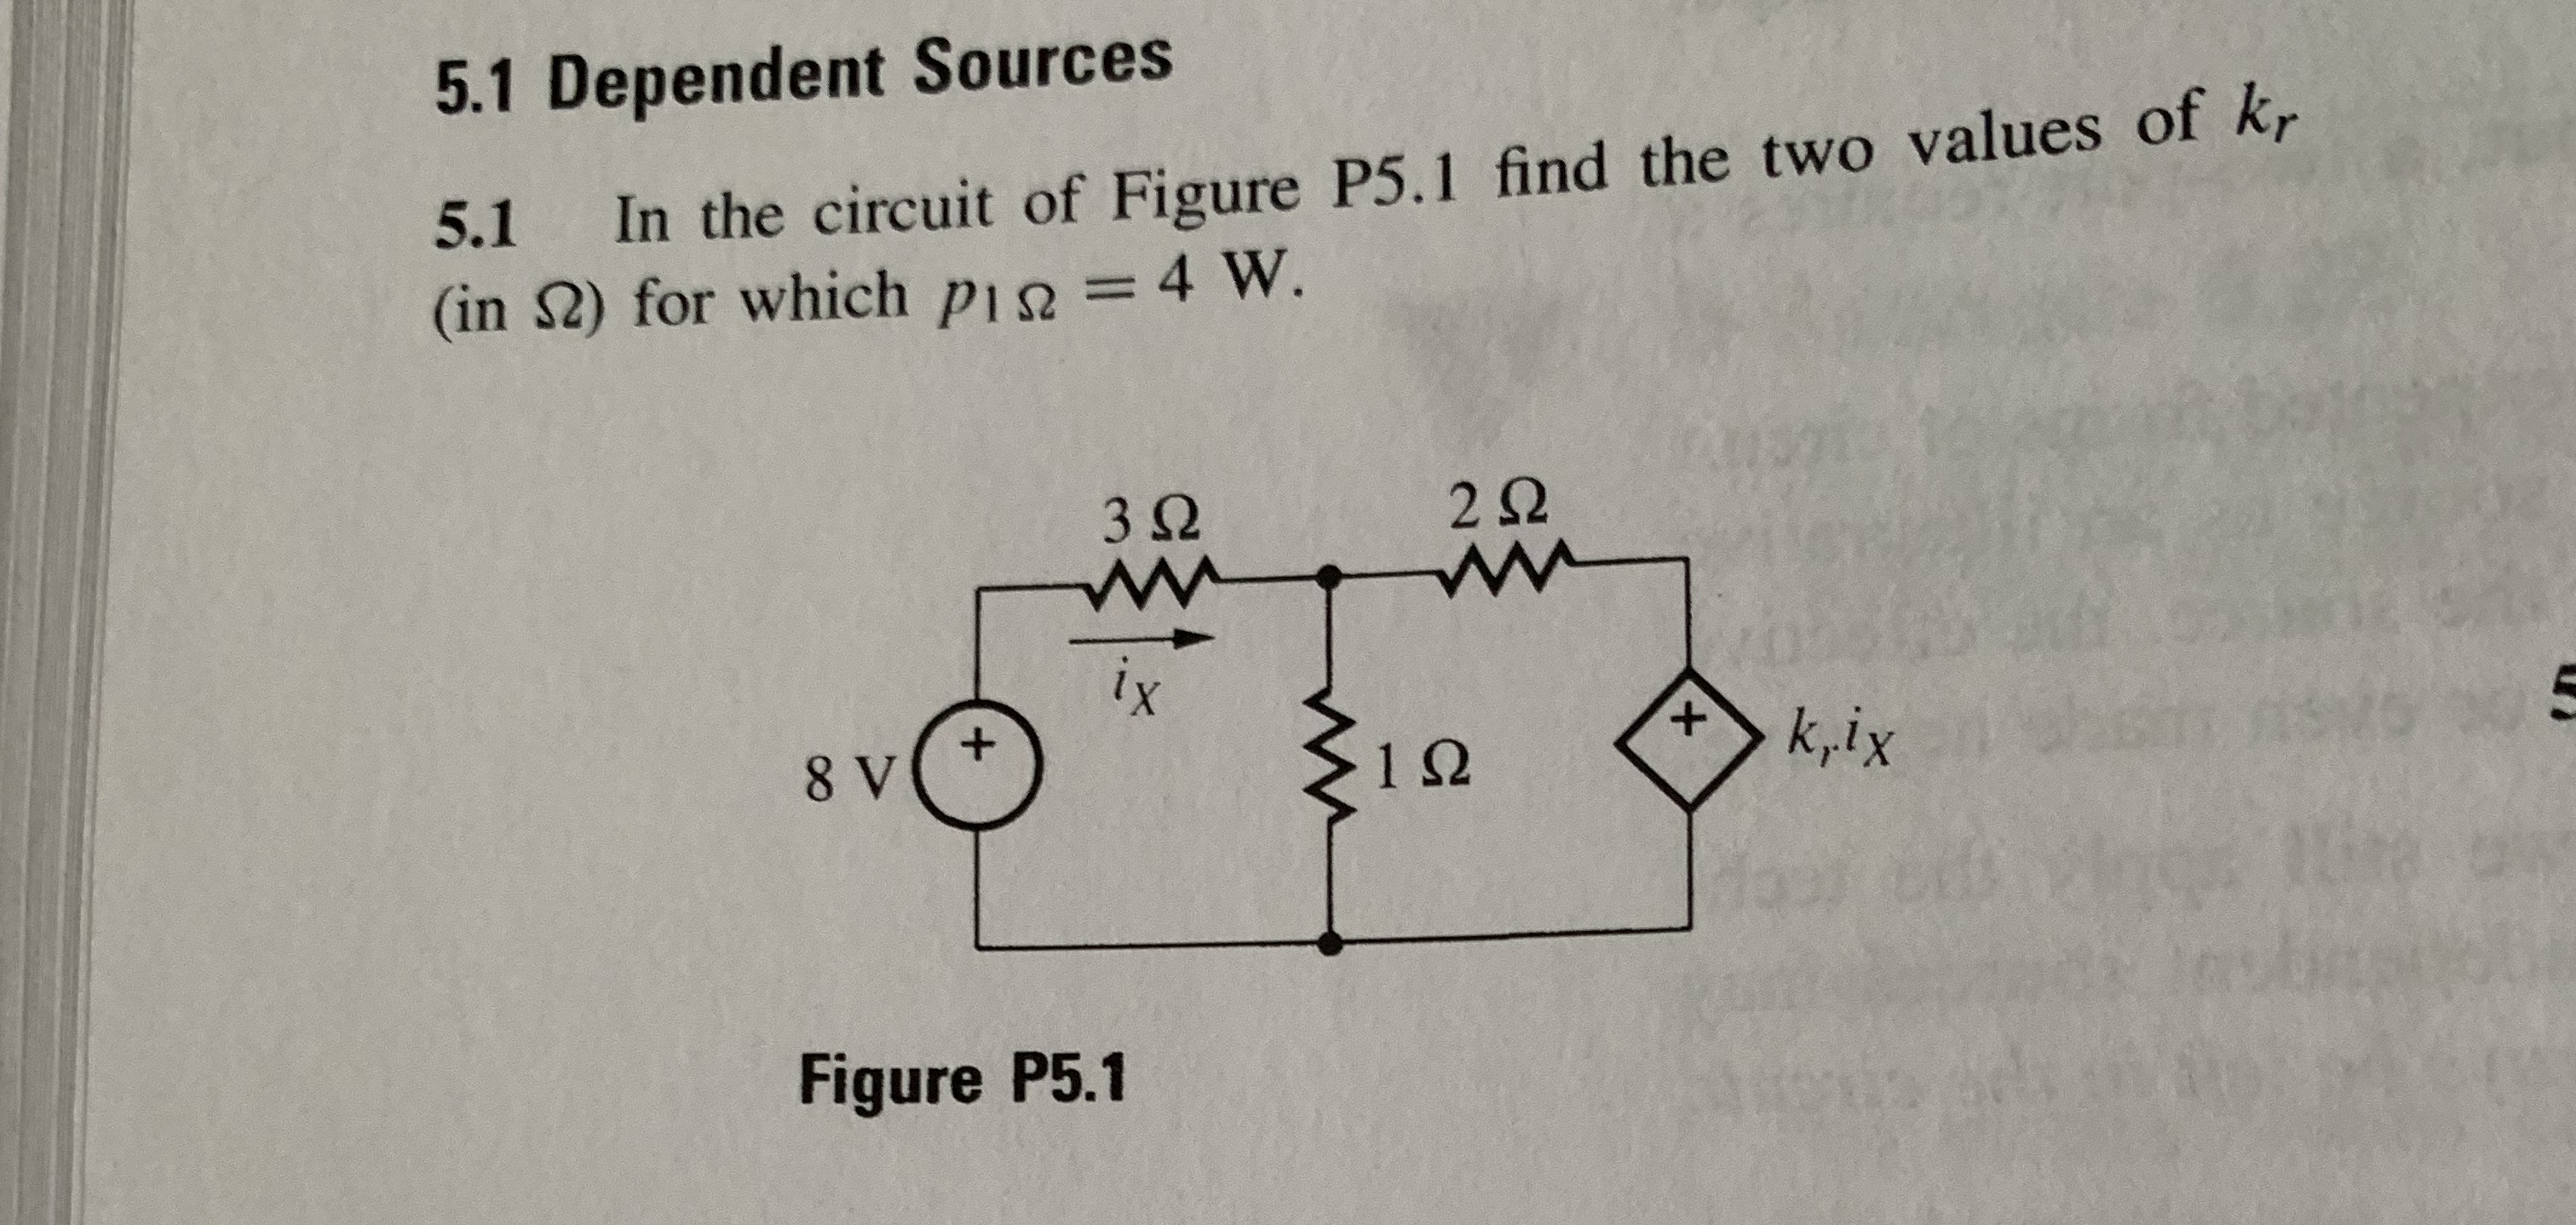 5.1 Dependent Sources
5.1 In the circuit of Figure P5.1 find the two values of kr
(in S) for which pi= 4 W.
2 Q
3Ω
ix
k,ix
8 V
1Ω
Figure P5.1
